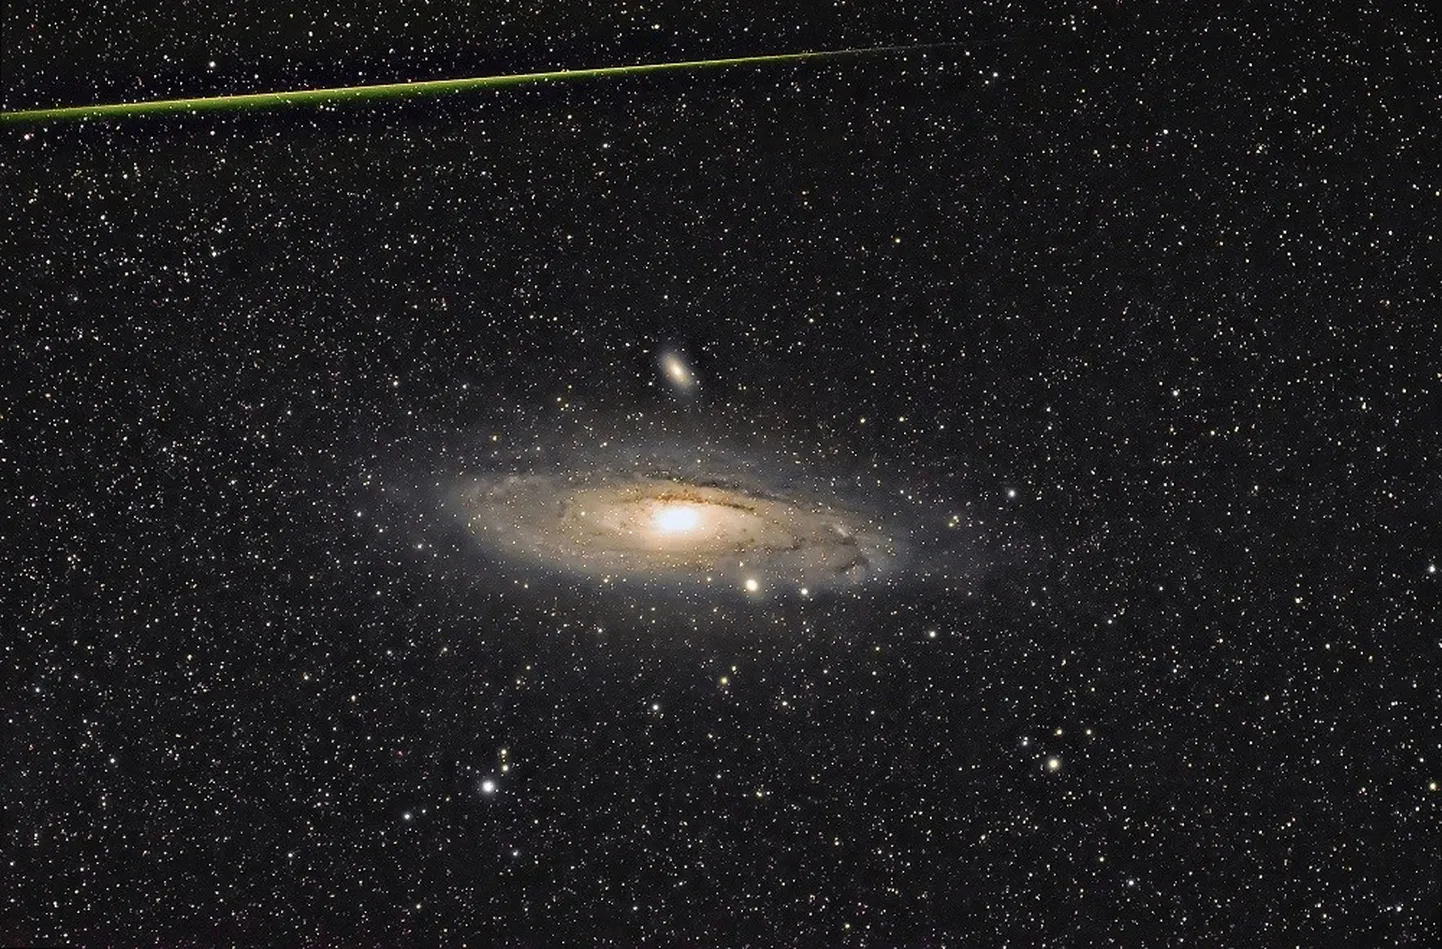 Andromeeda galaktika